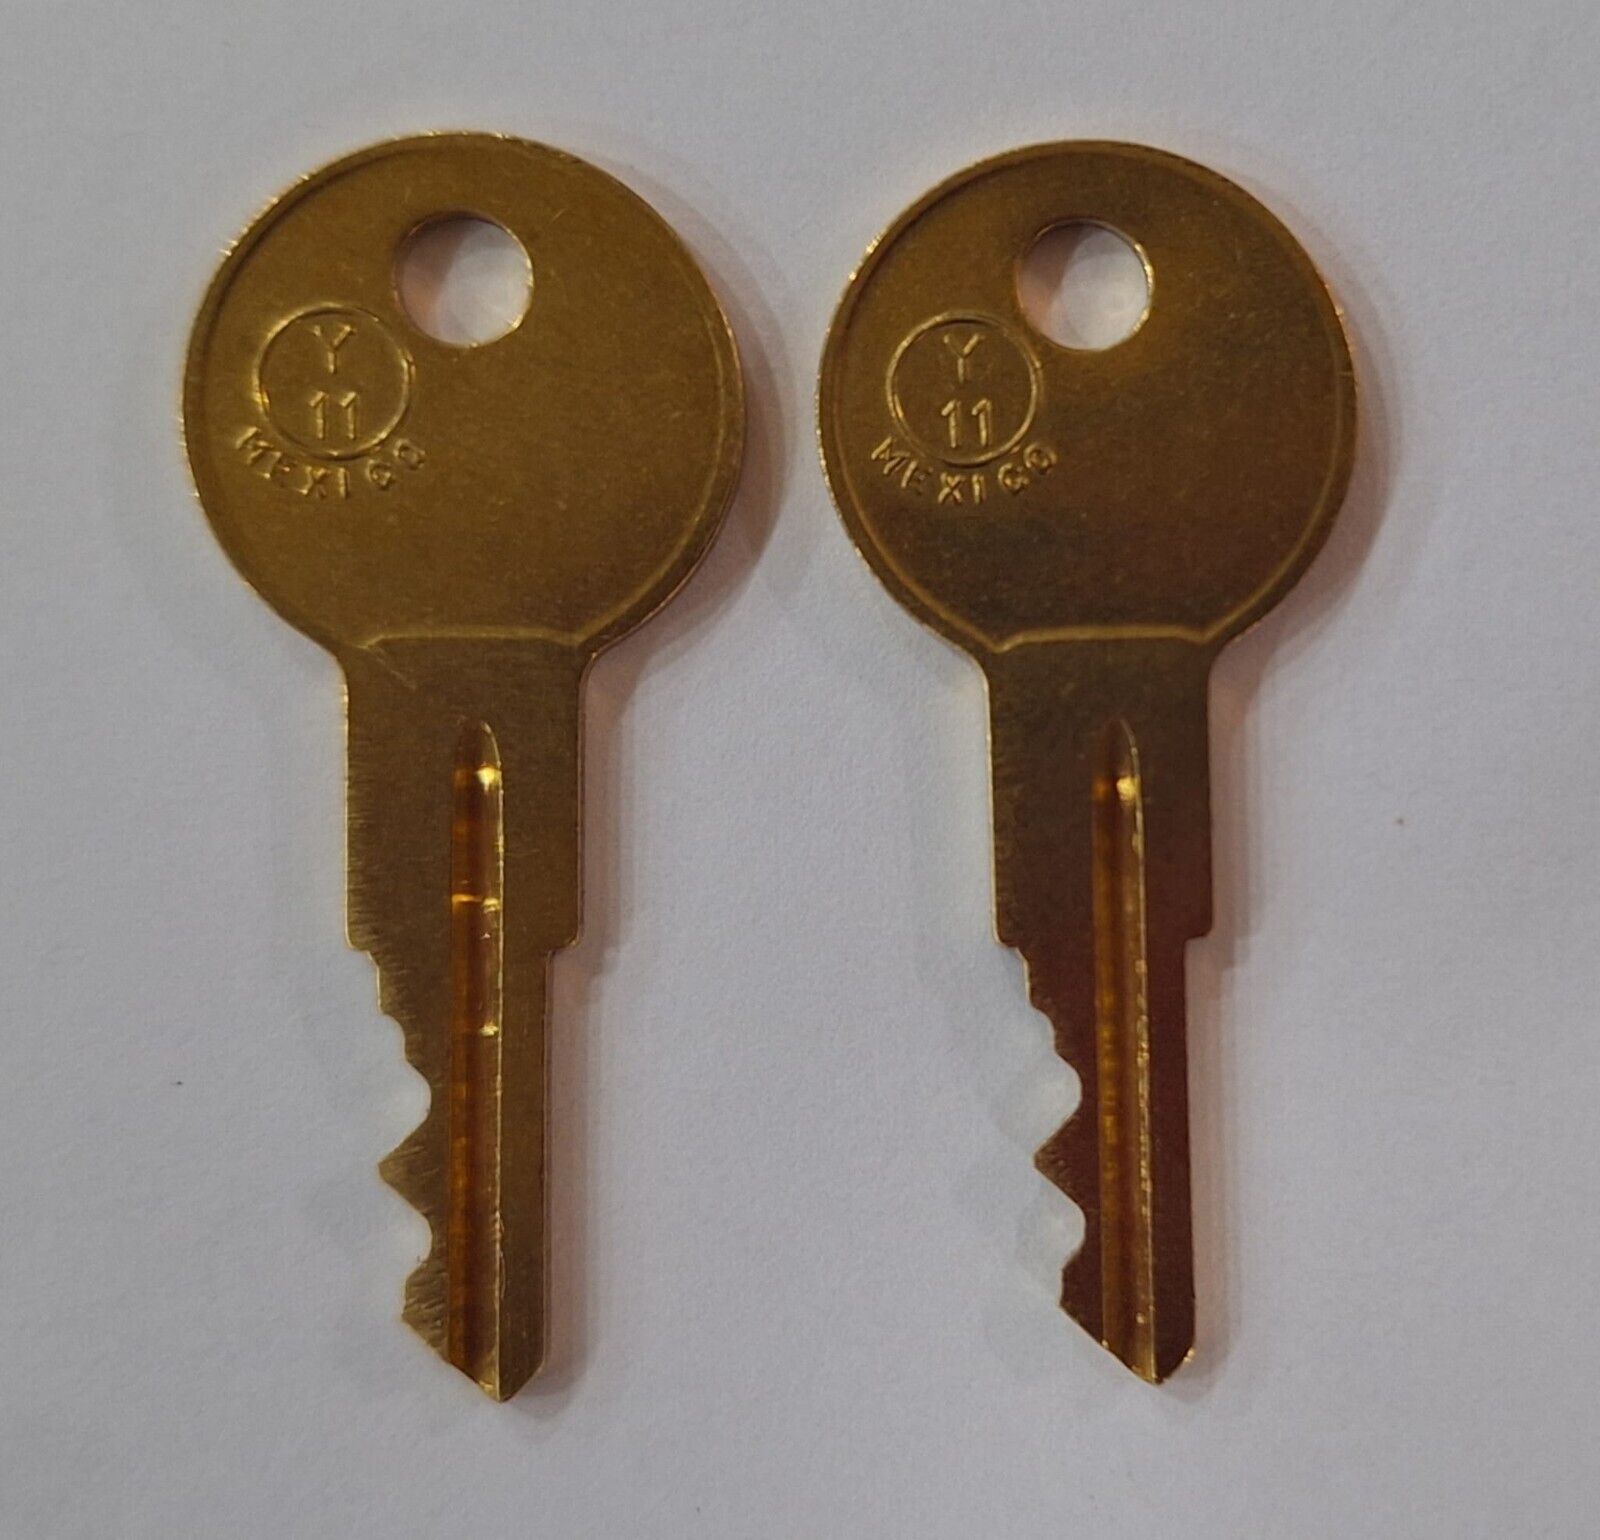 185E Two Keys for Hon / ESP File Cabinet, Desk, Office Furniture cut to key code